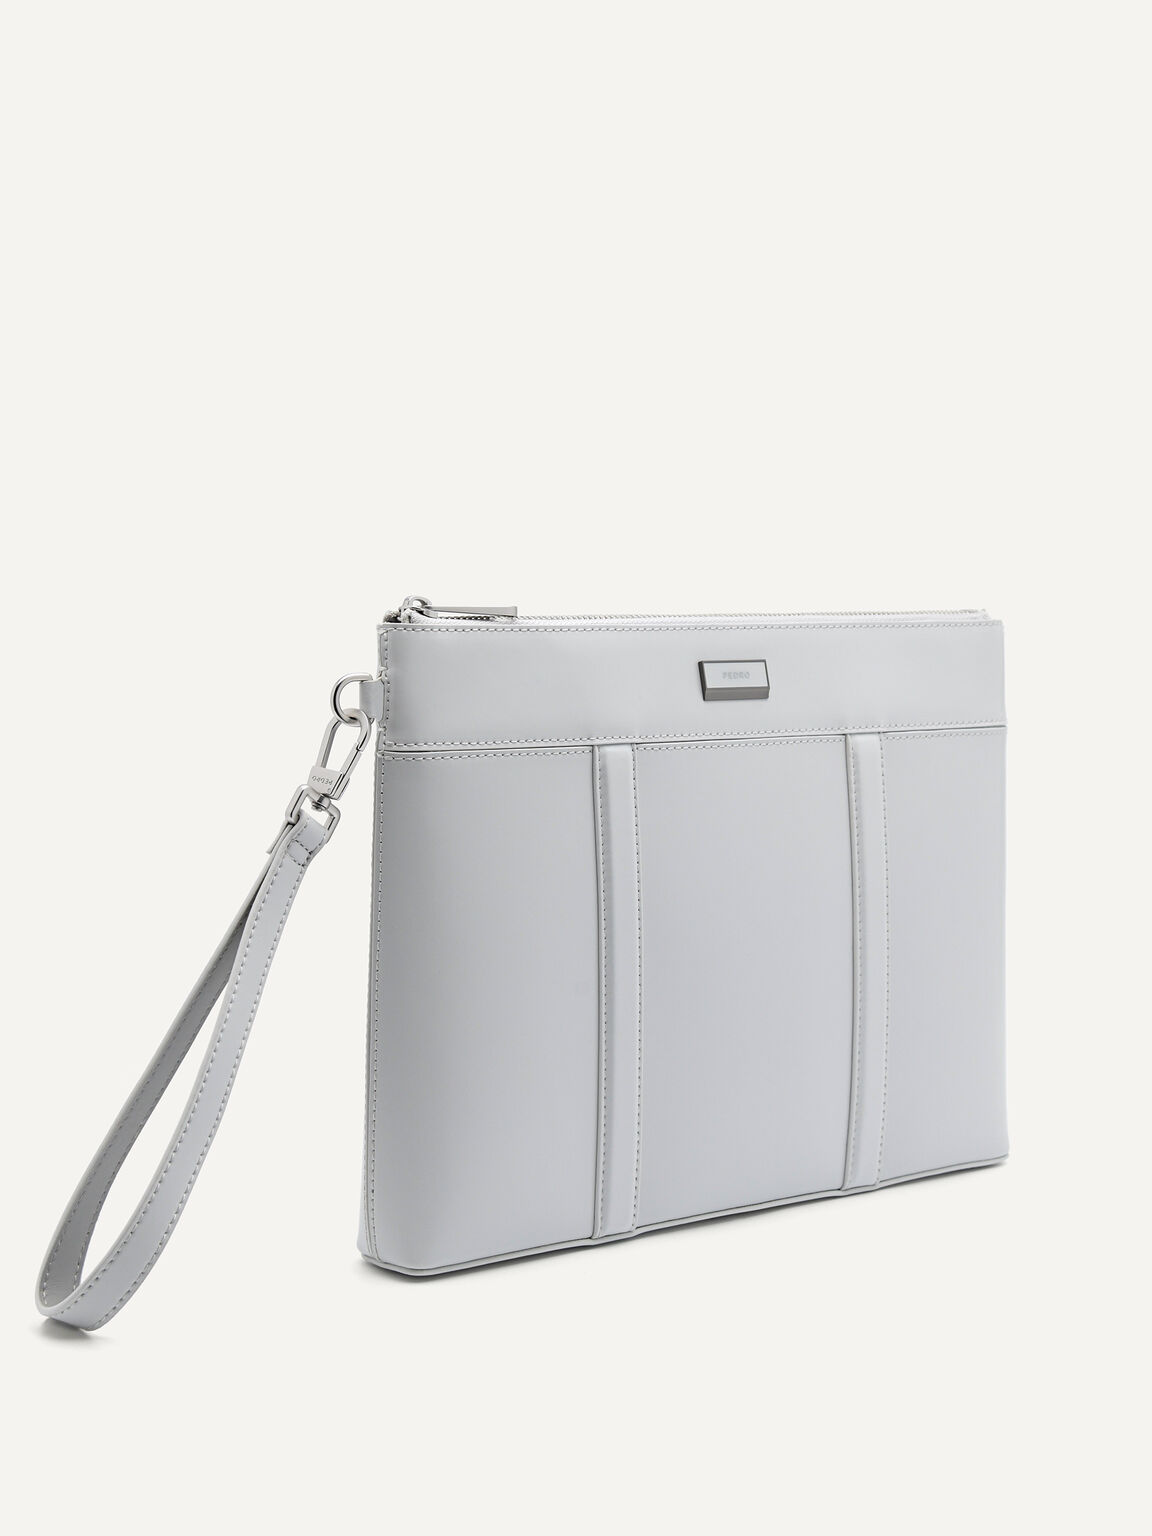 Allen Leather Portfolio Bag, Light Grey